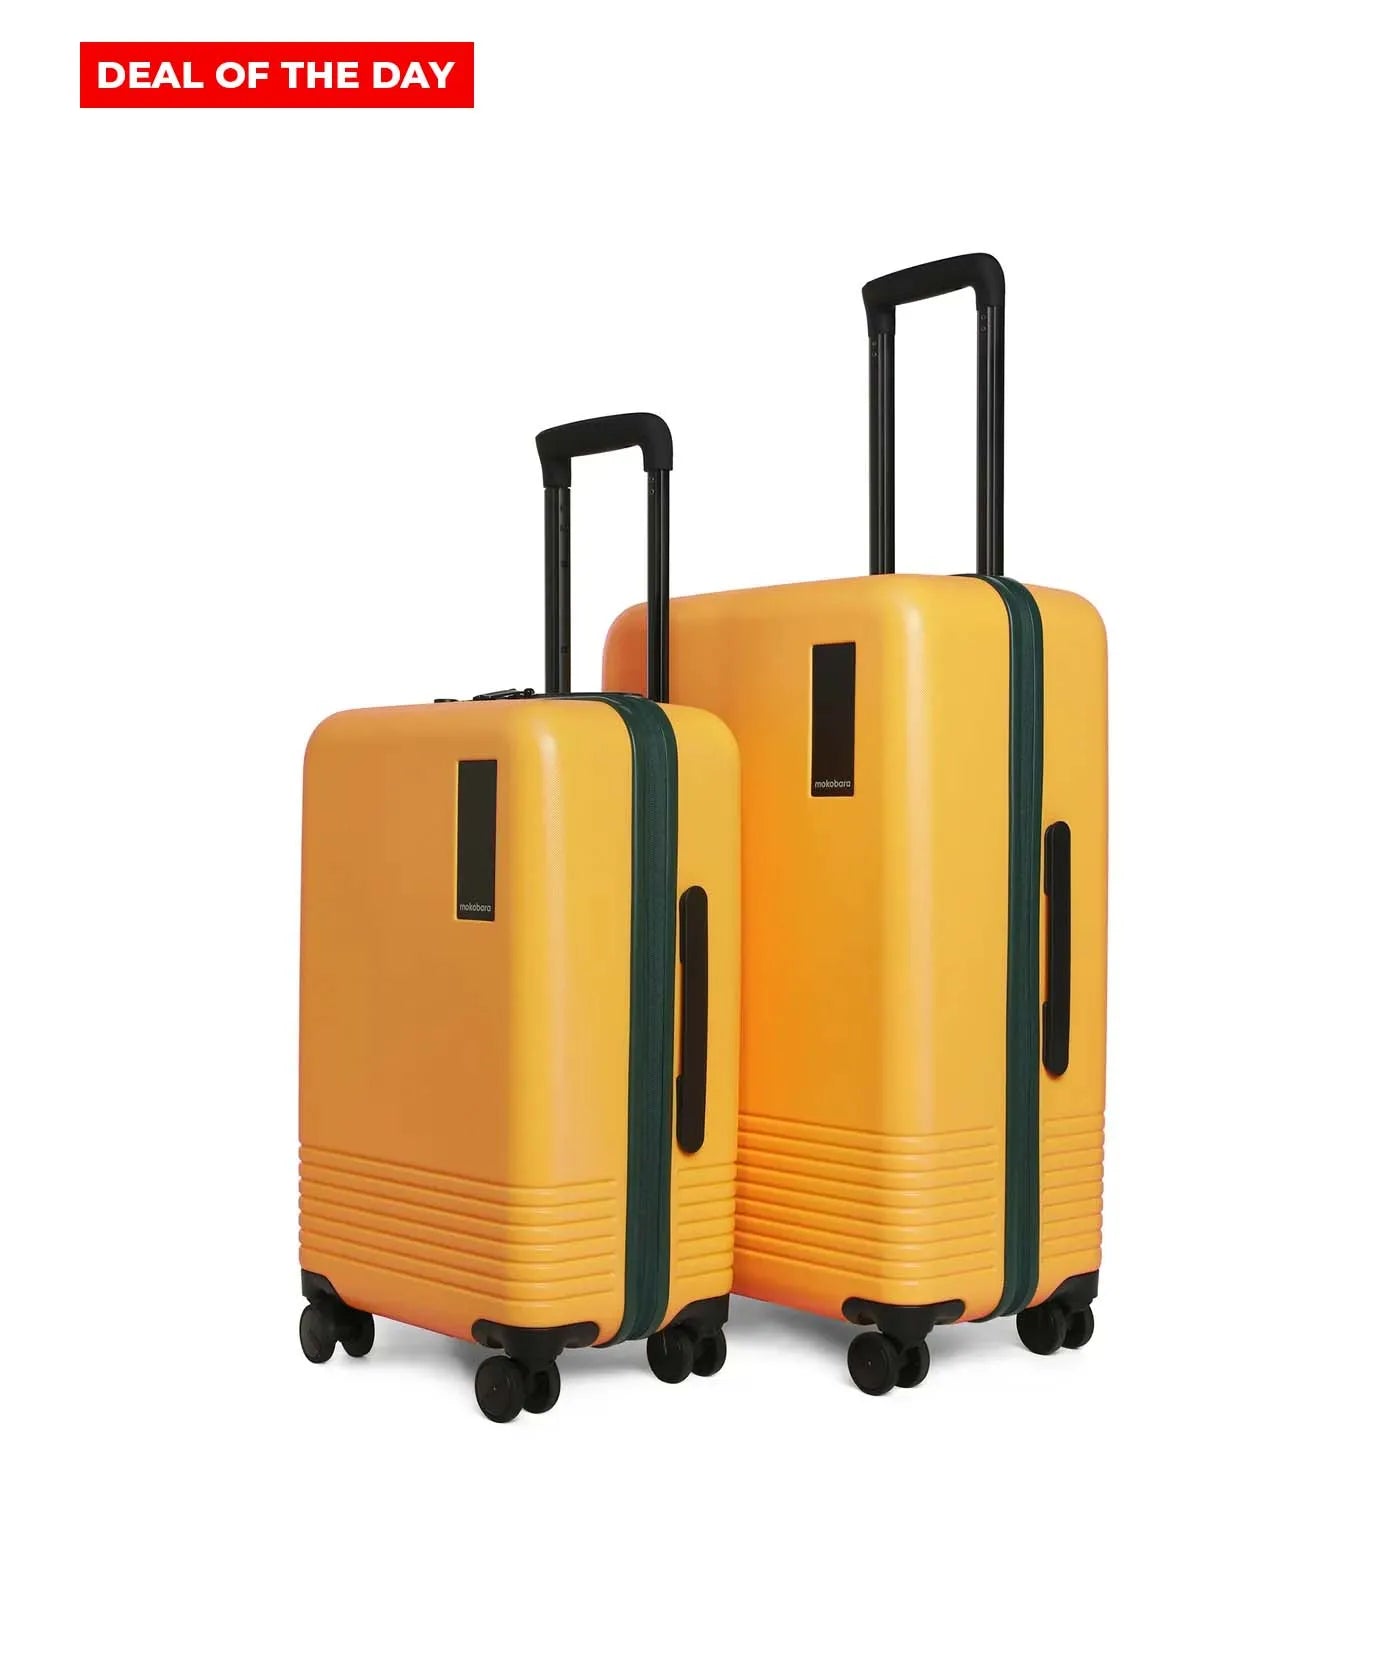 The Set of 2 Luggage